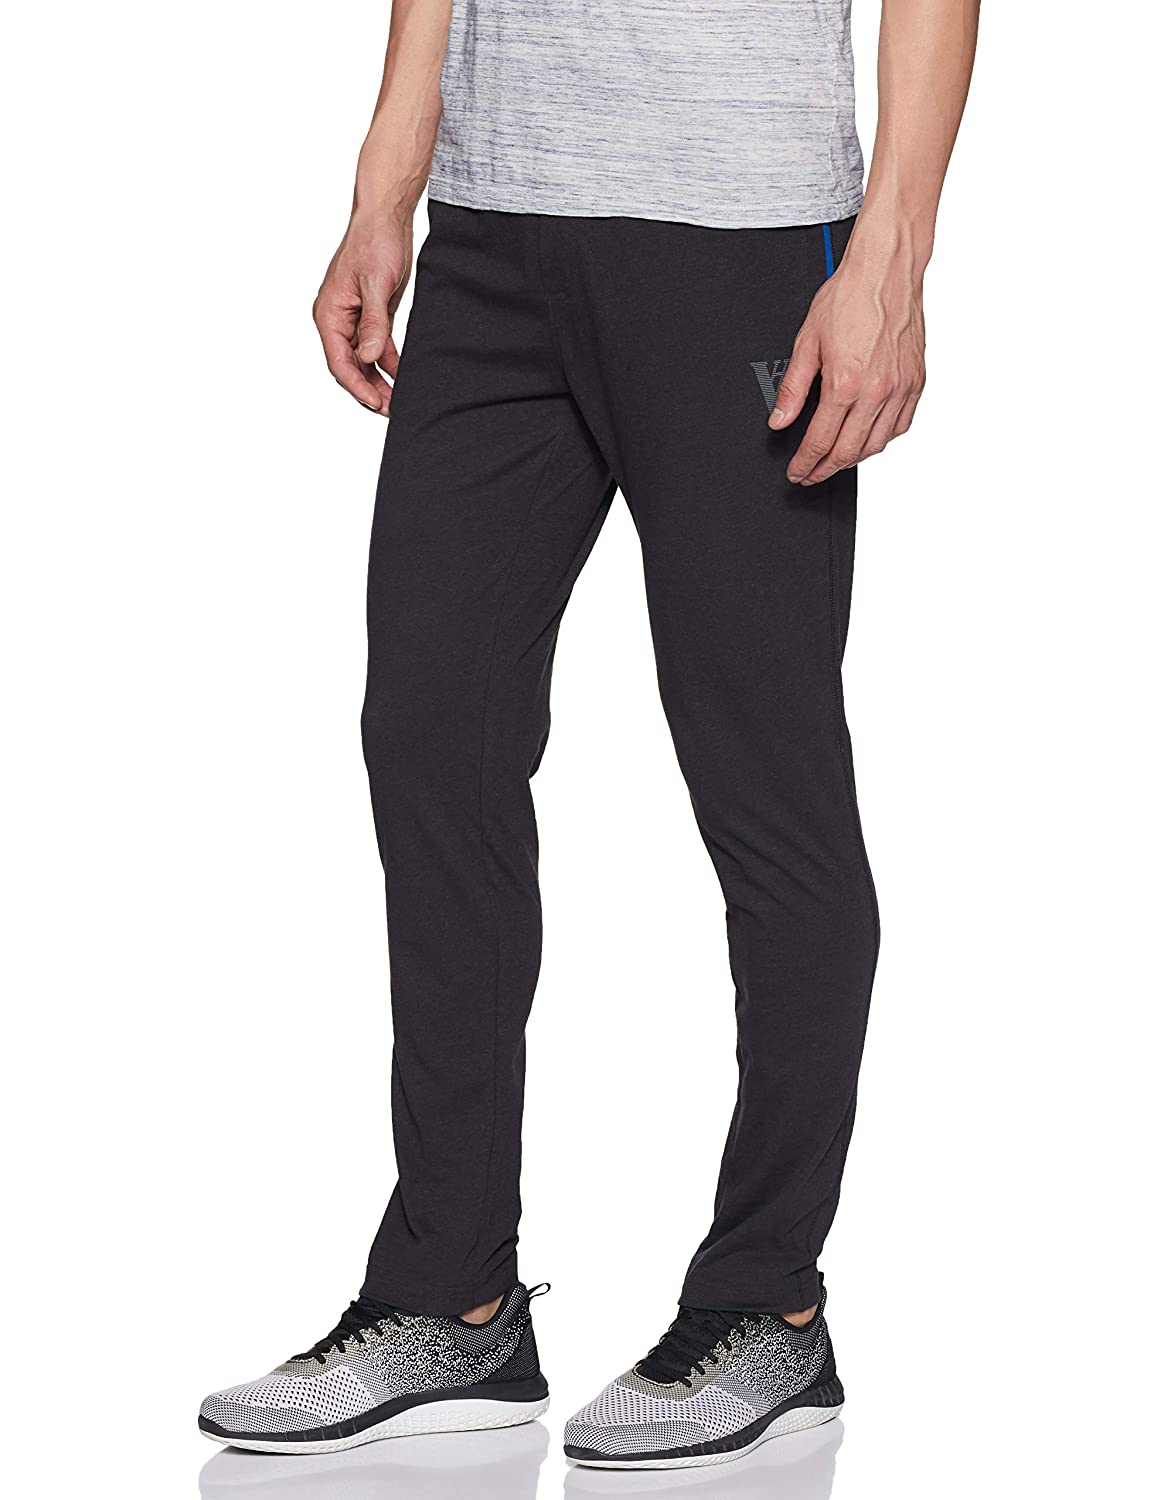 Van Heusen Casual Gym Wear Men's Track Pants Dark grey - Stilento